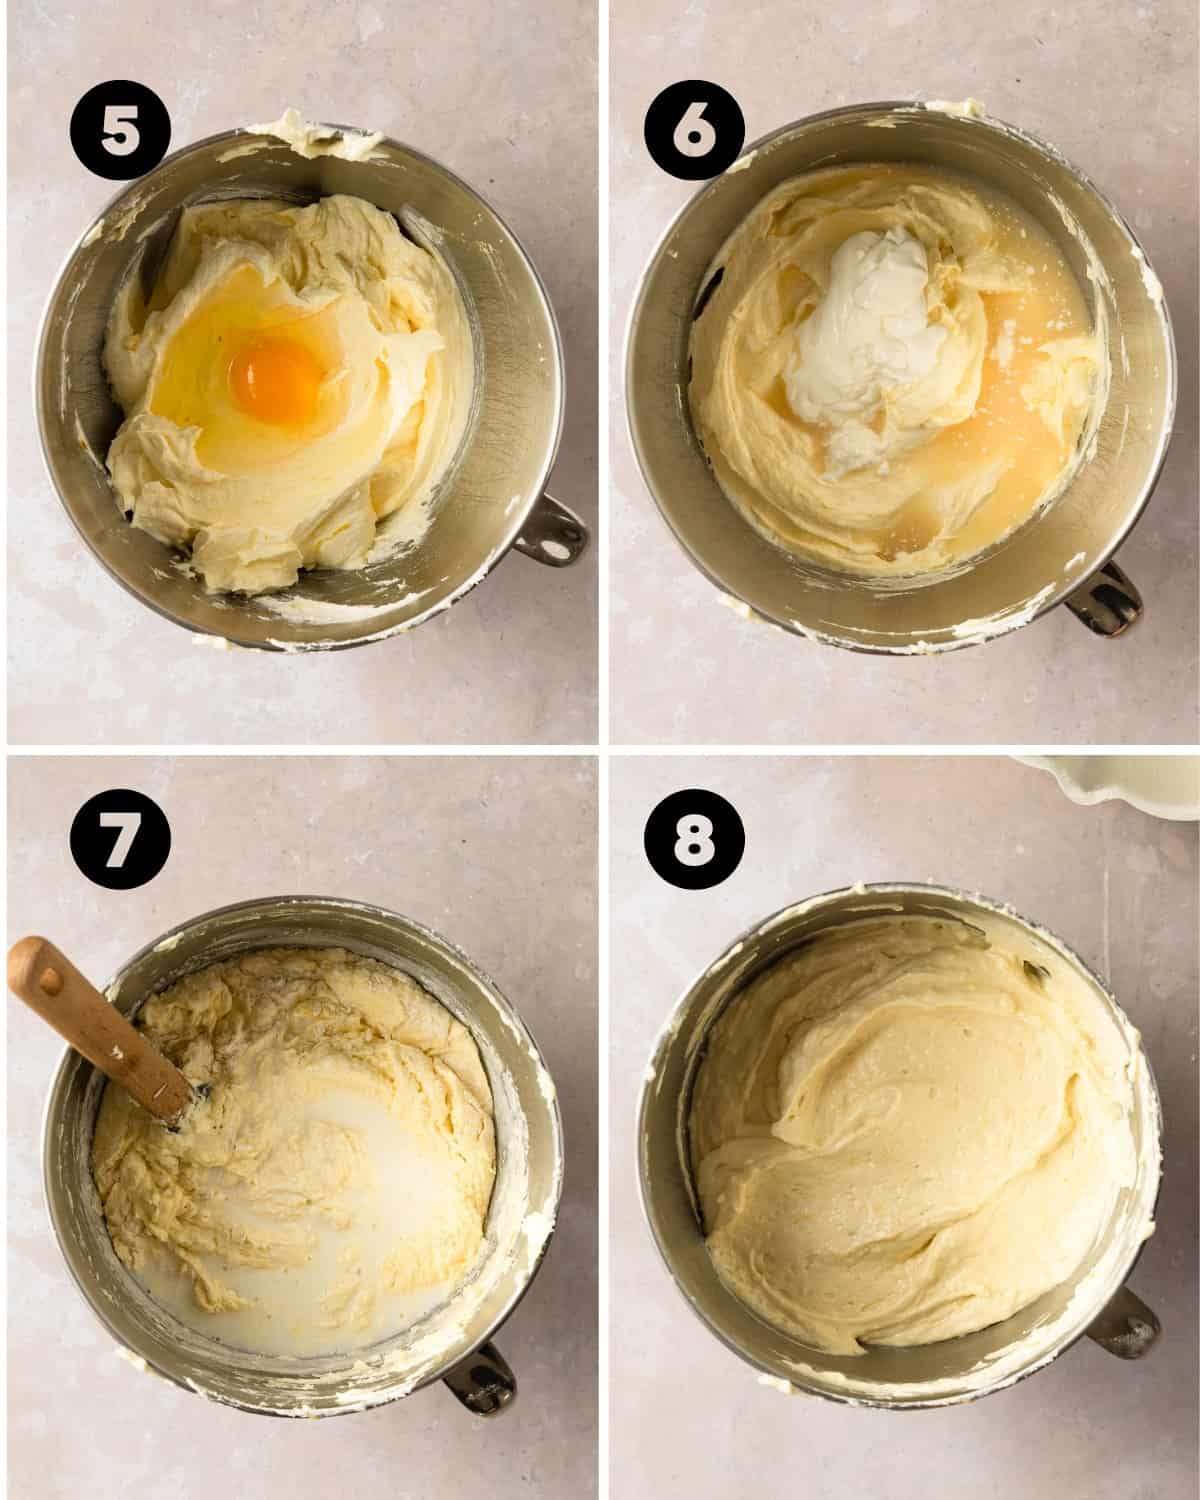 Lemonade Bundt Cake Recipe Steps 5-8. Mixing butter, oil, sugar, and eggs.